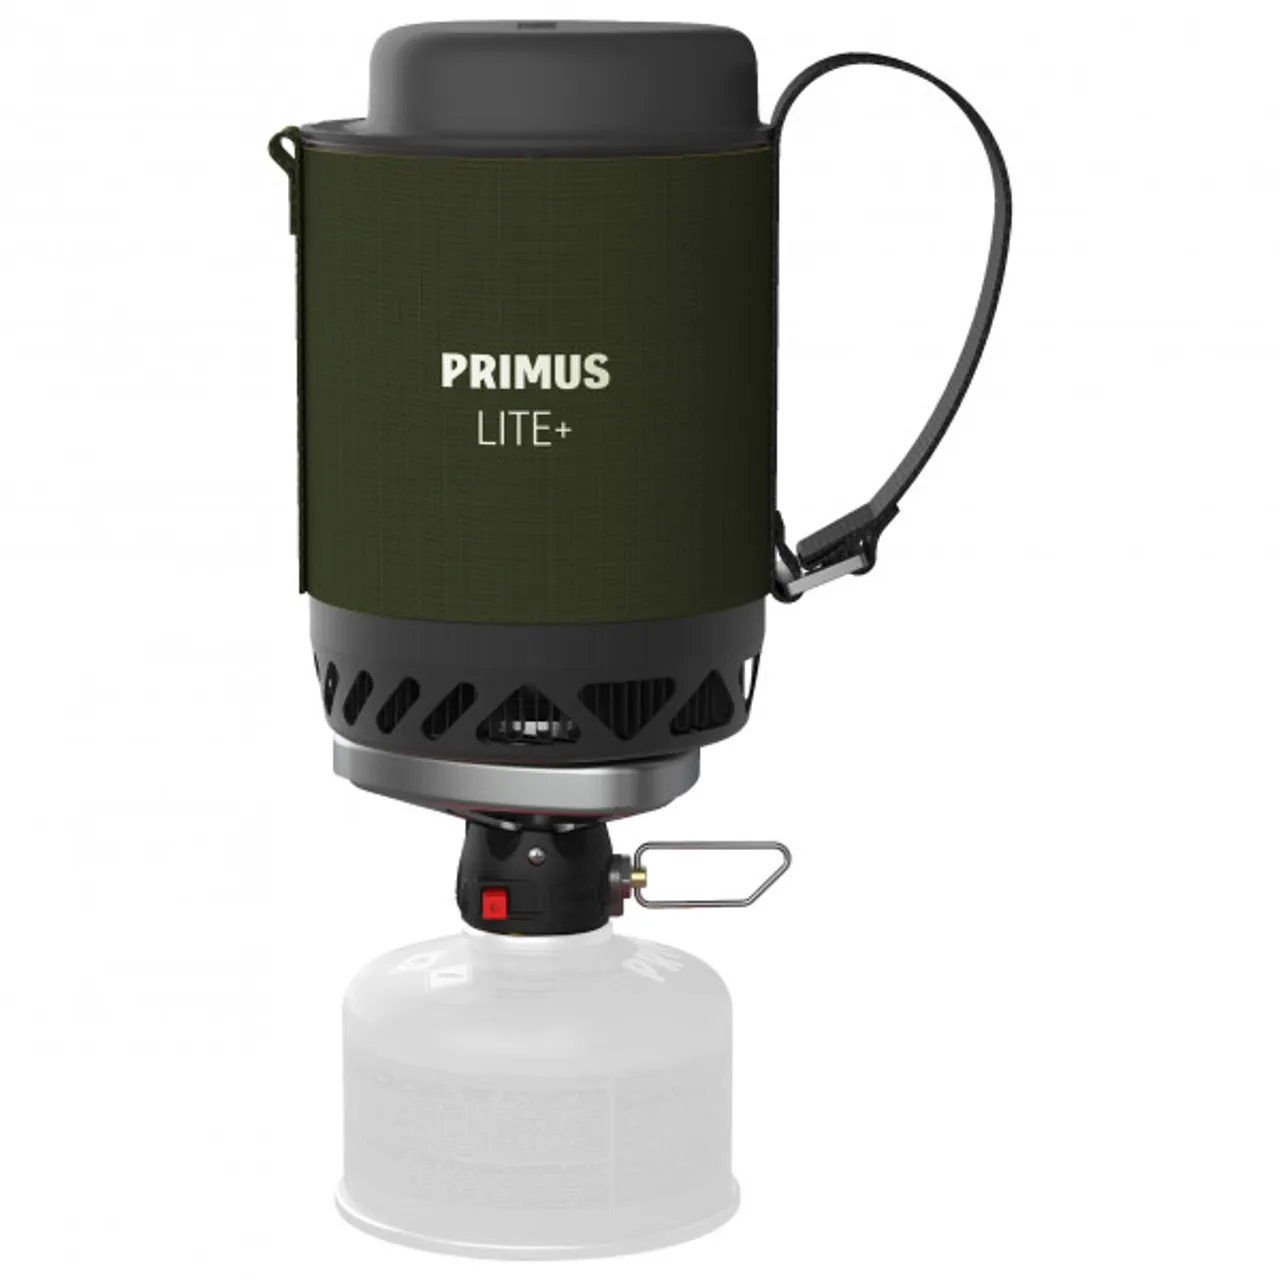 Primus - Lite Plus Stove System - Gas stove size 500 ml, olive